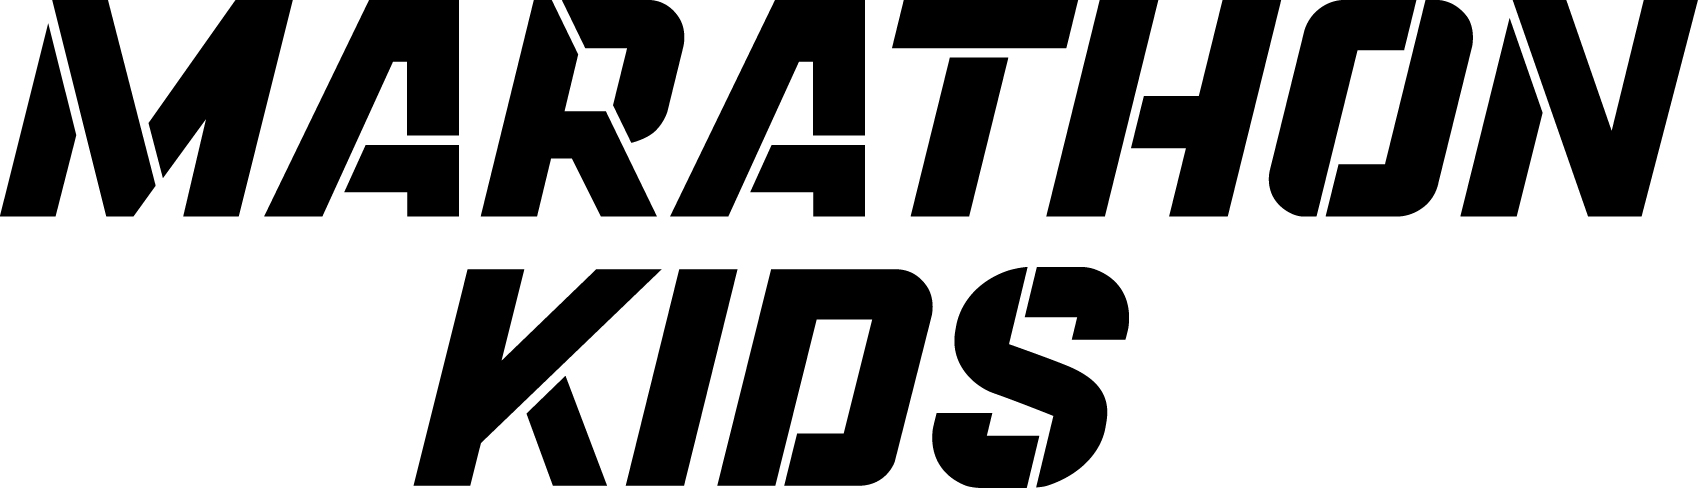 Marathon Kids UK's logo